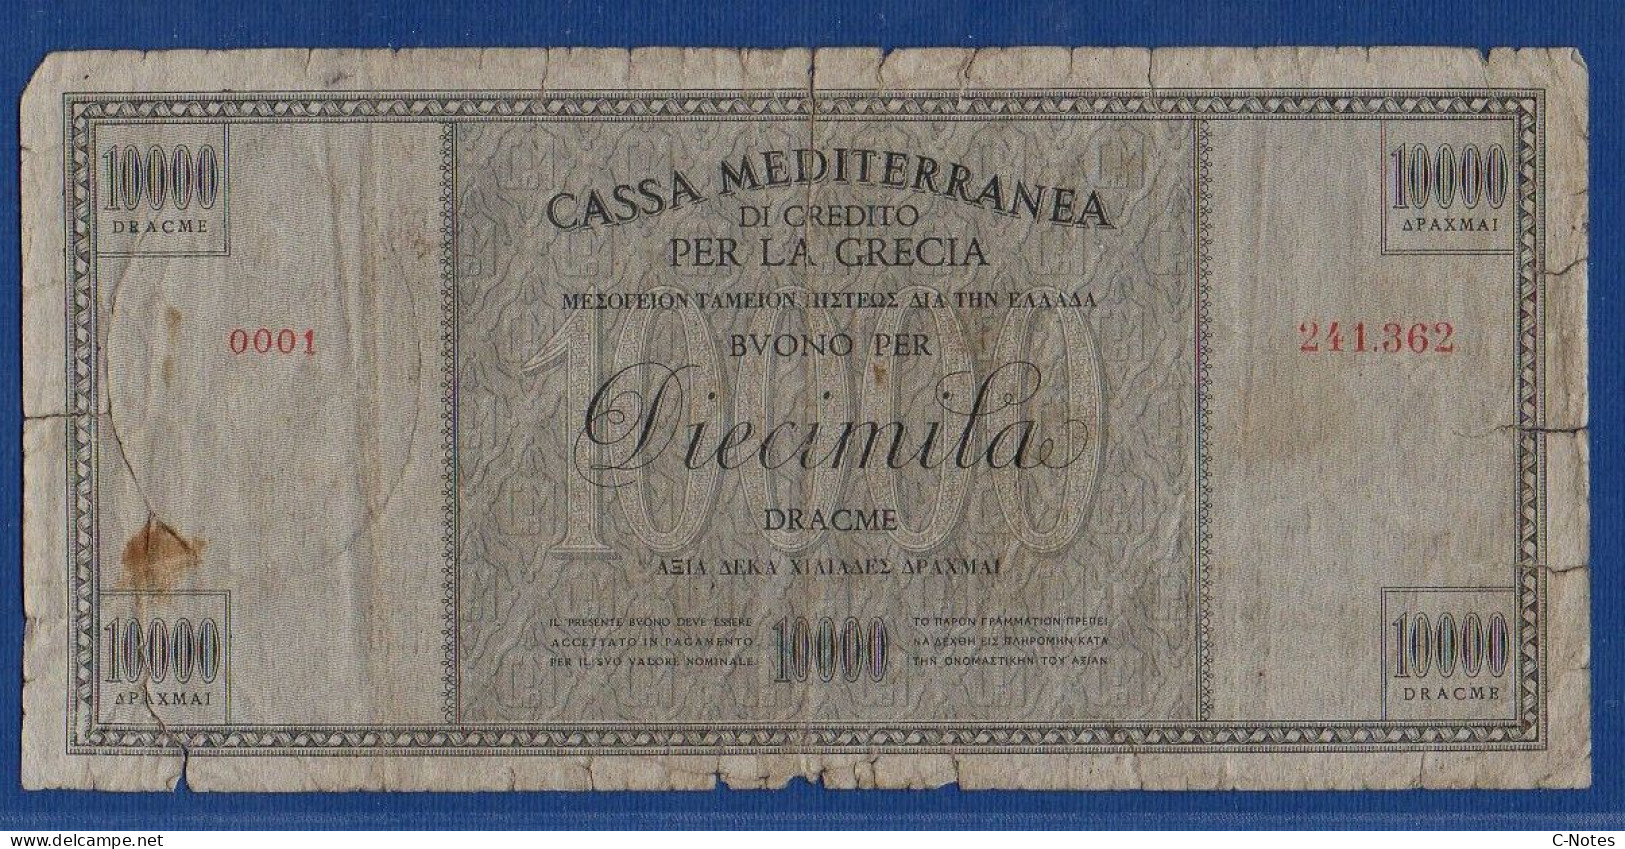 GREECE - Cassa Mediterranea Di Credito - P.M8 – 10000 DRACME ND 1941 - CIRCULATED - SERIE 0001 241.362 - Italian Occupation (Aegean)